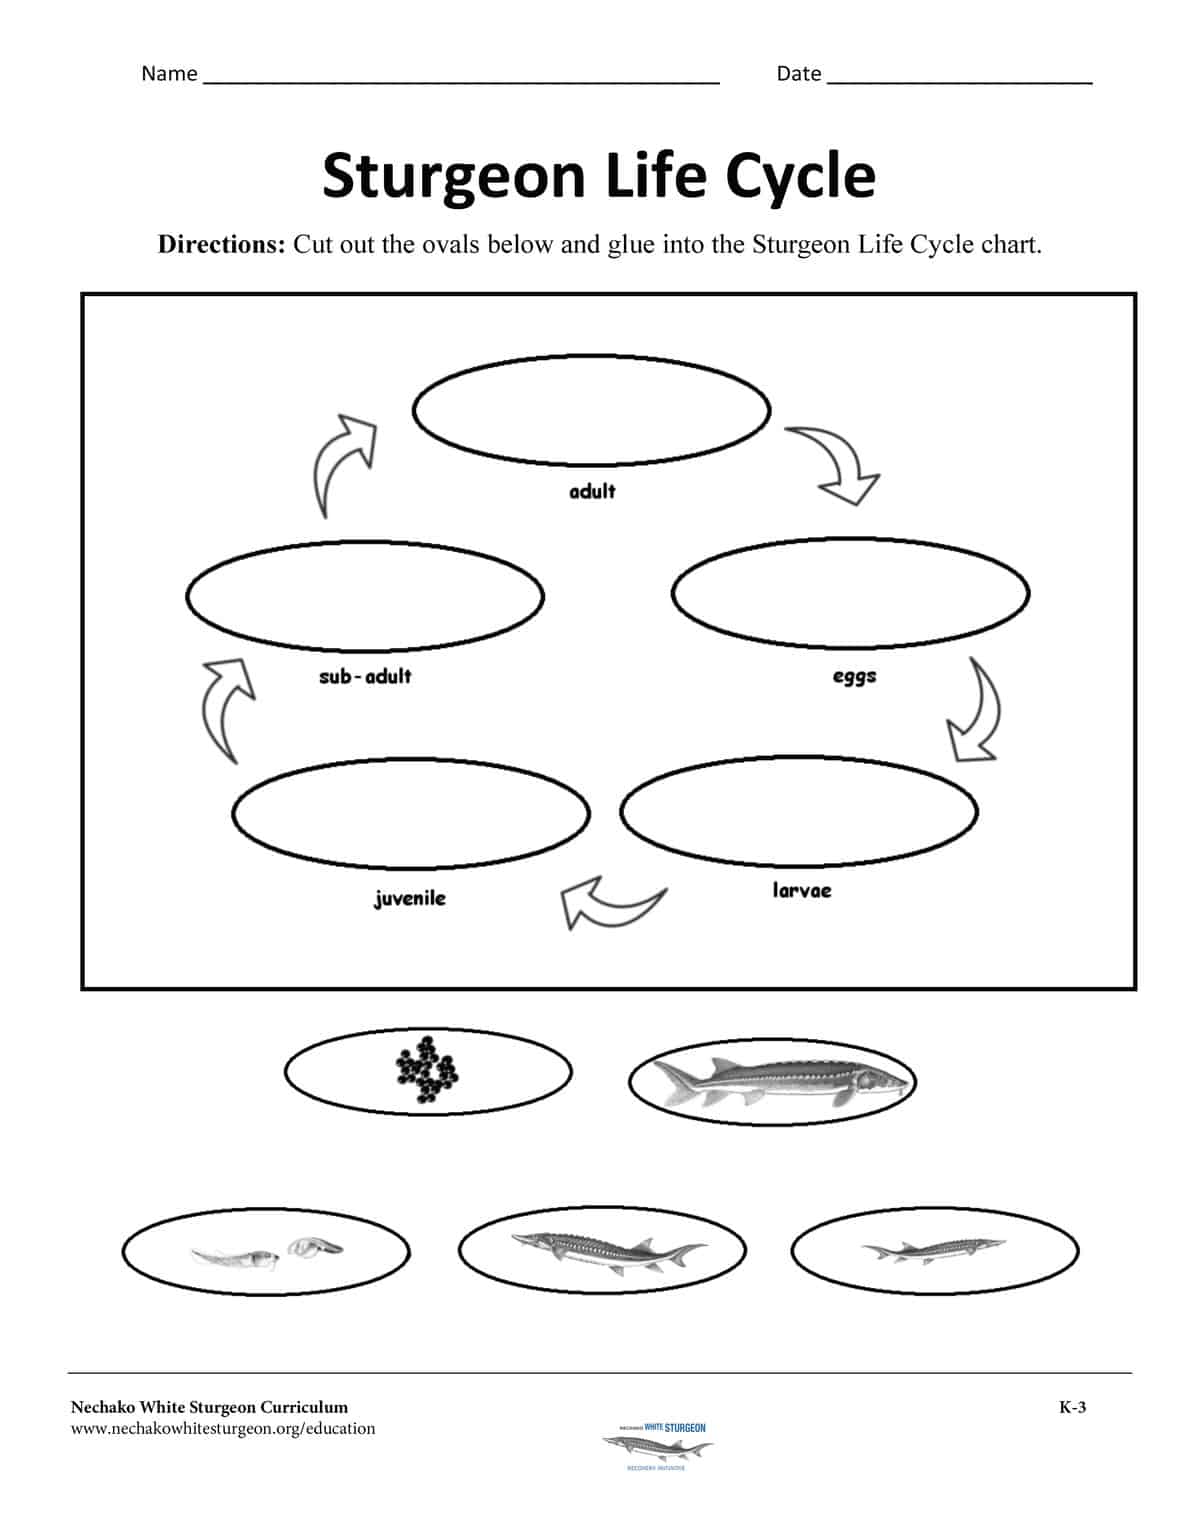 NWSRI Education - Sturgeon Life Cycle K-3